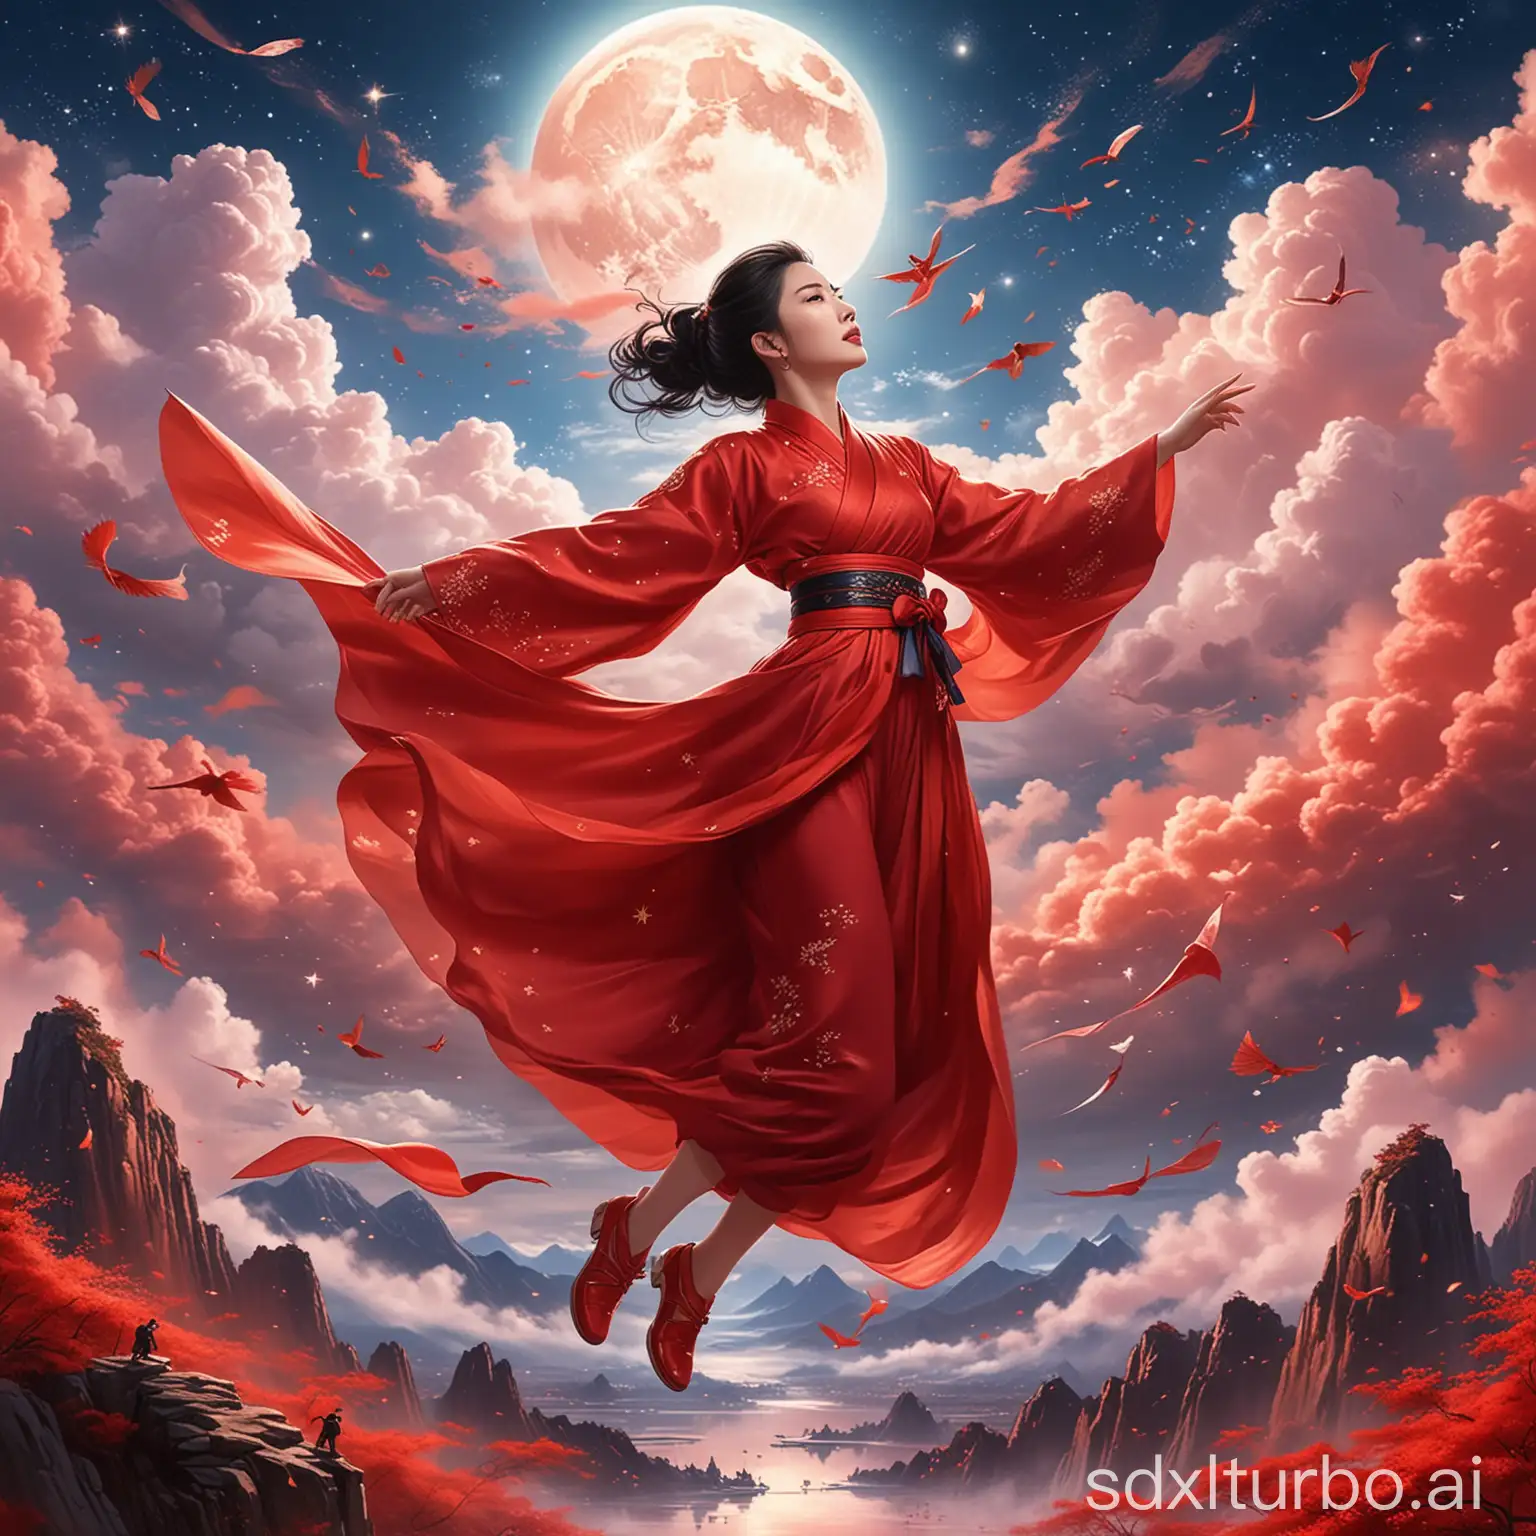 Liu-Yifei-as-Mulan-Celestial-Journey-in-Vibrant-Red-Dress